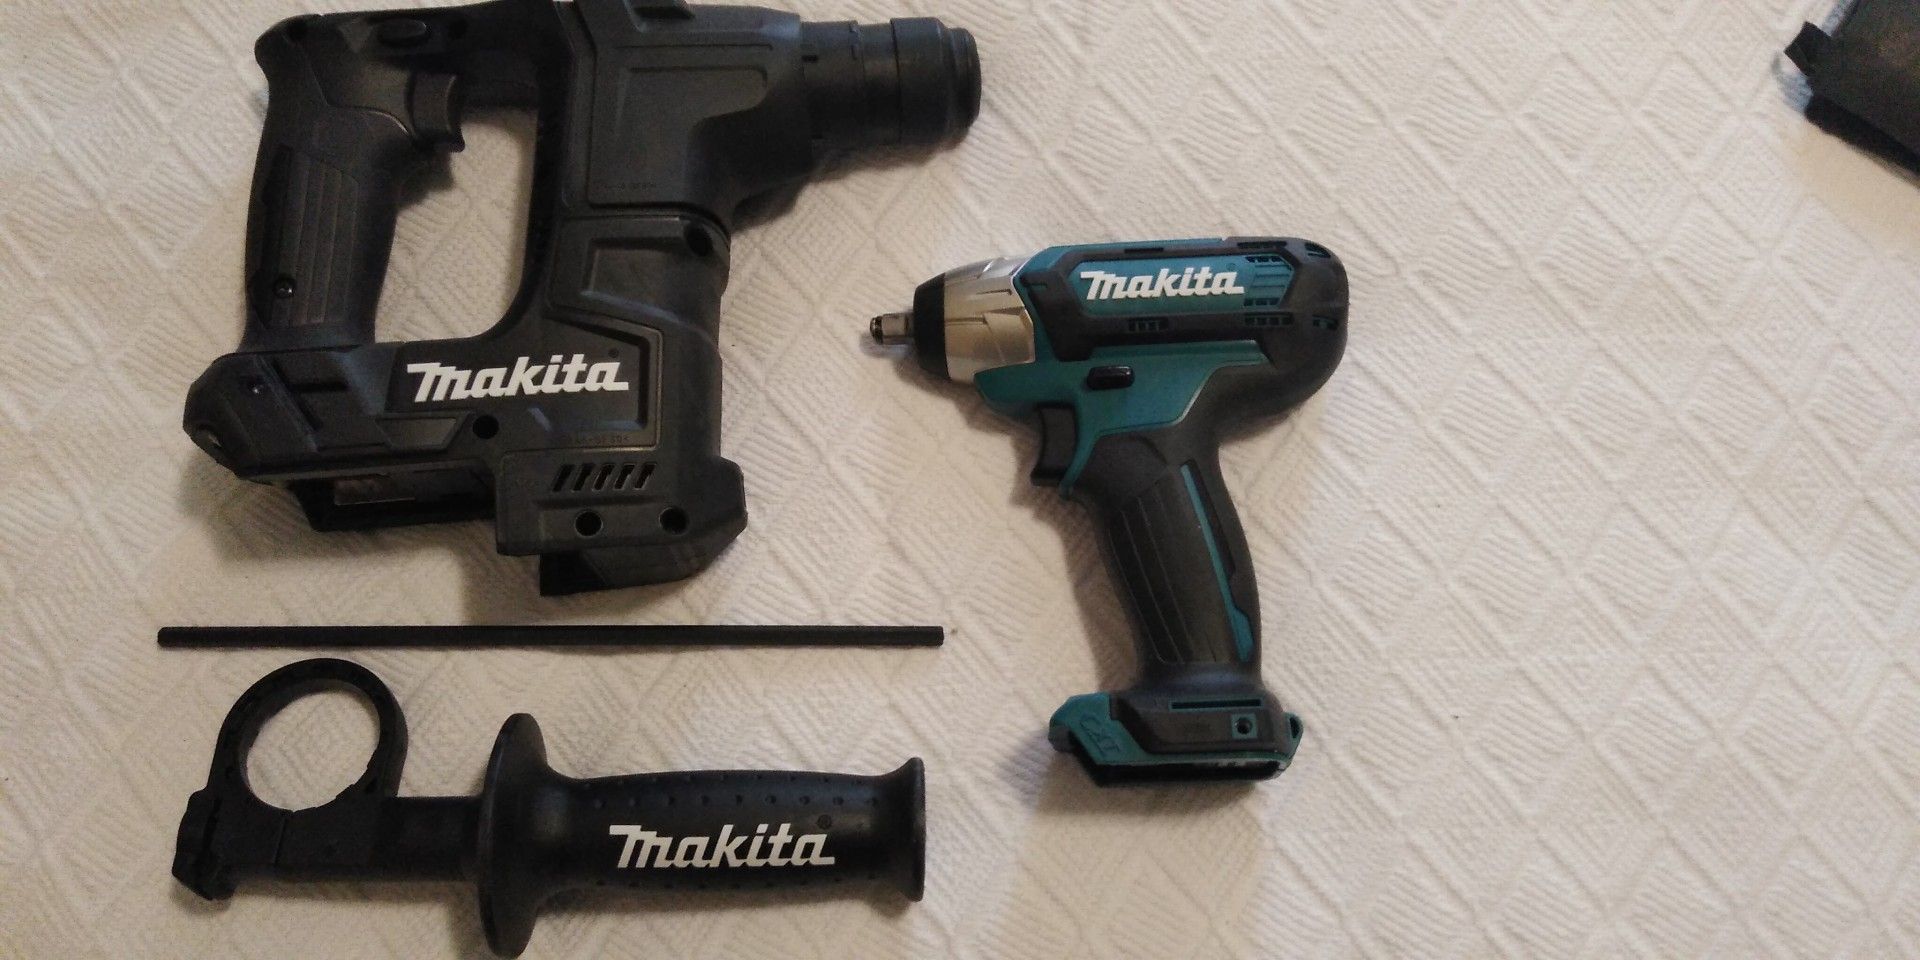 Makita power tools for sale